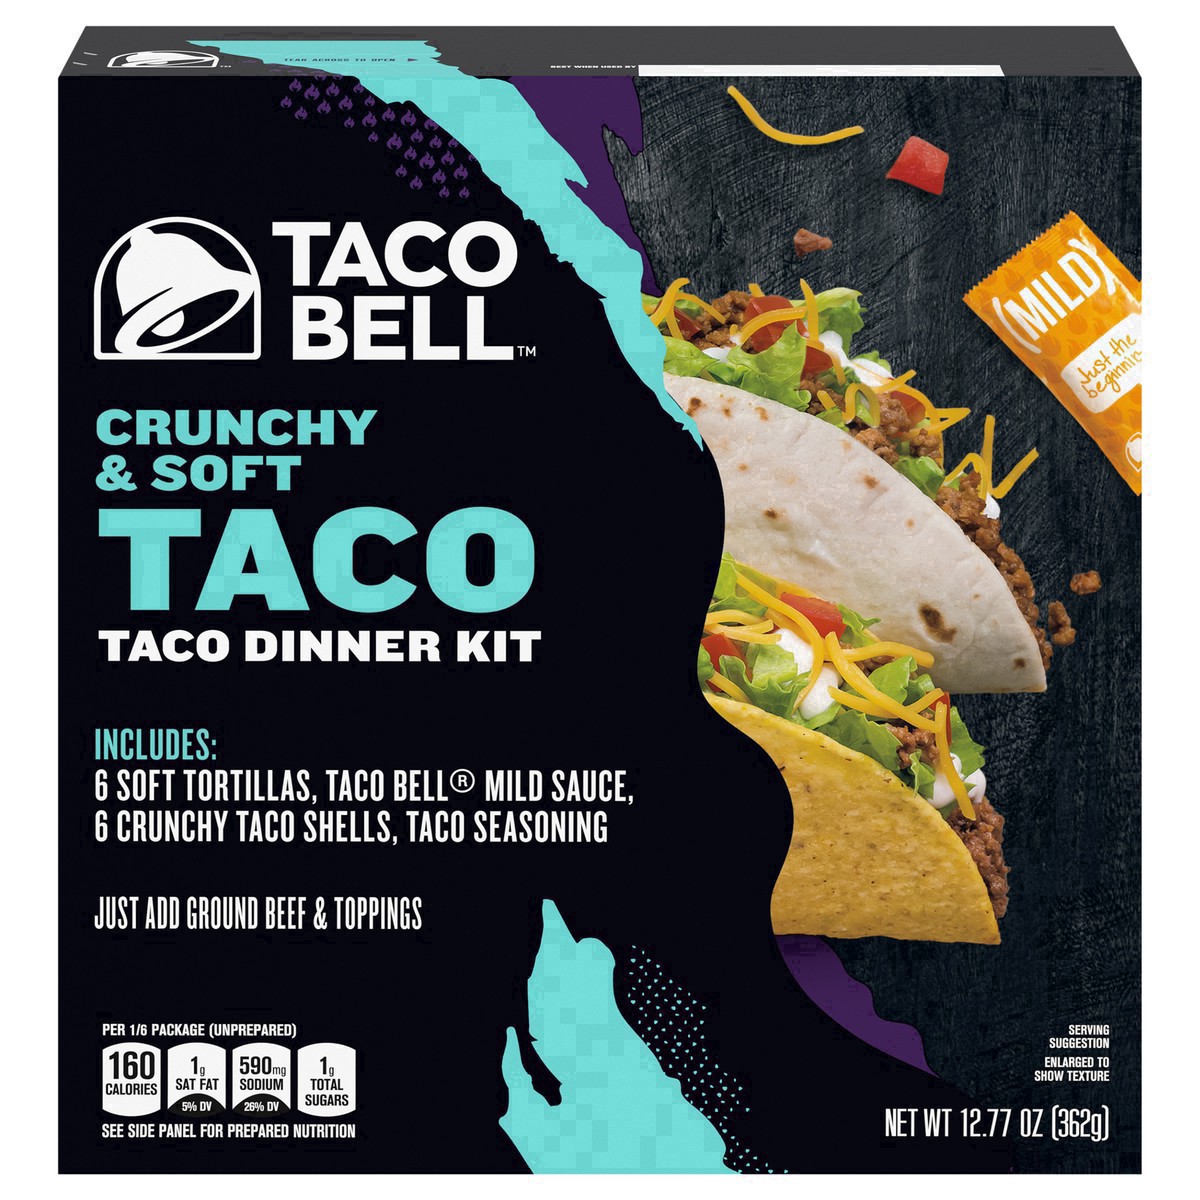 slide 30 of 101, Taco Bell Crunchy & Soft Taco Cravings Kit with 6 Soft Tortillas, 6 Crunchy Taco Shells, Taco Bell Mild Sauce & Seasoning, 12.77 oz Box, 1 ct